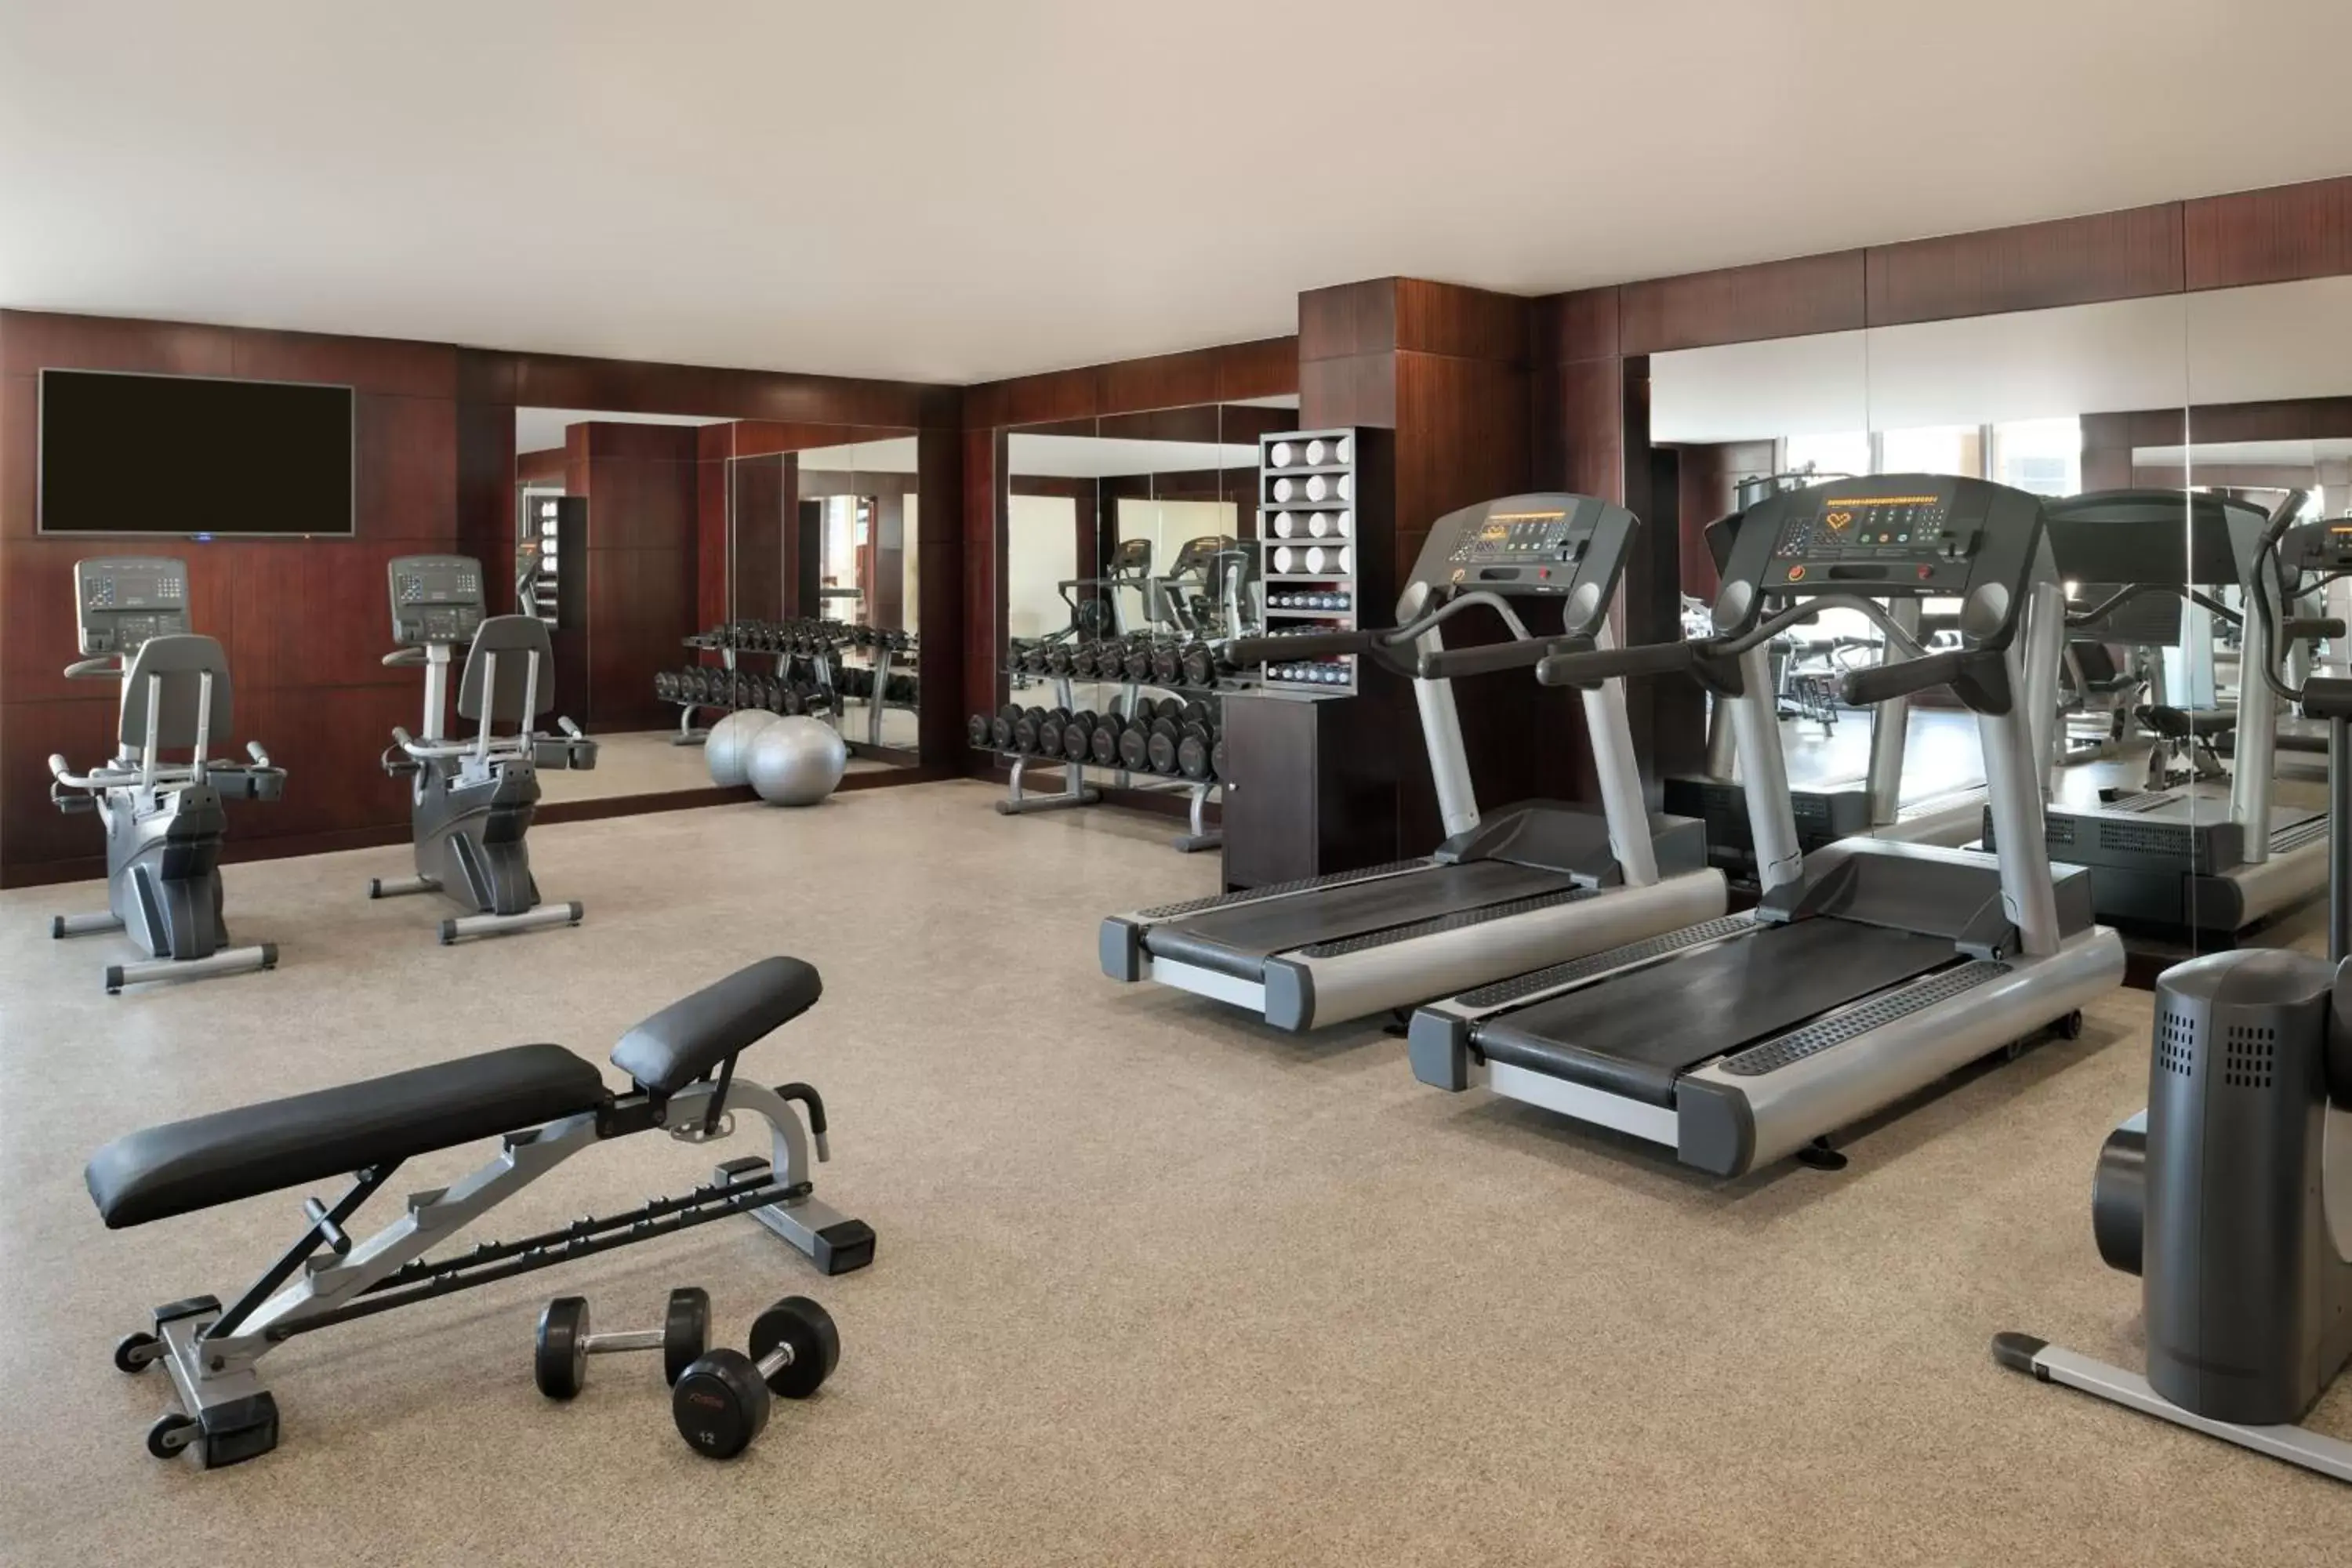 Fitness centre/facilities, Fitness Center/Facilities in Marriott Executive Apartments Manama, Bahrain